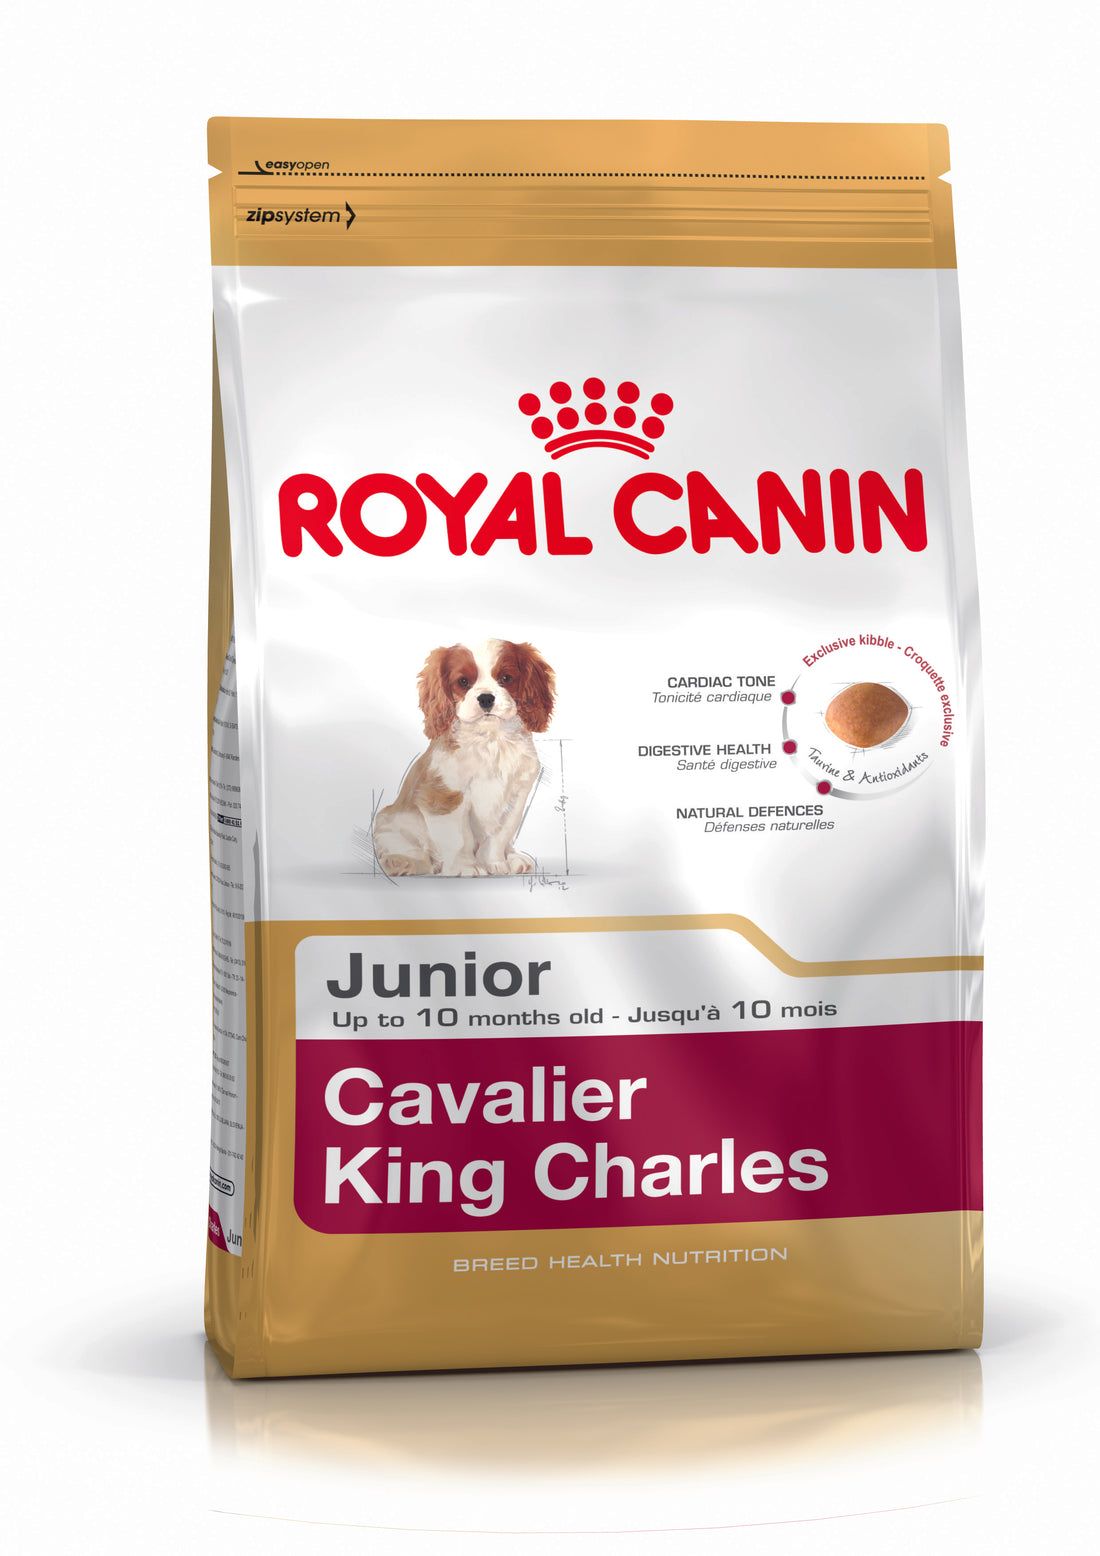 Royal Canin-Cavalier King Charles Puppy Dog Food 1.5Kg